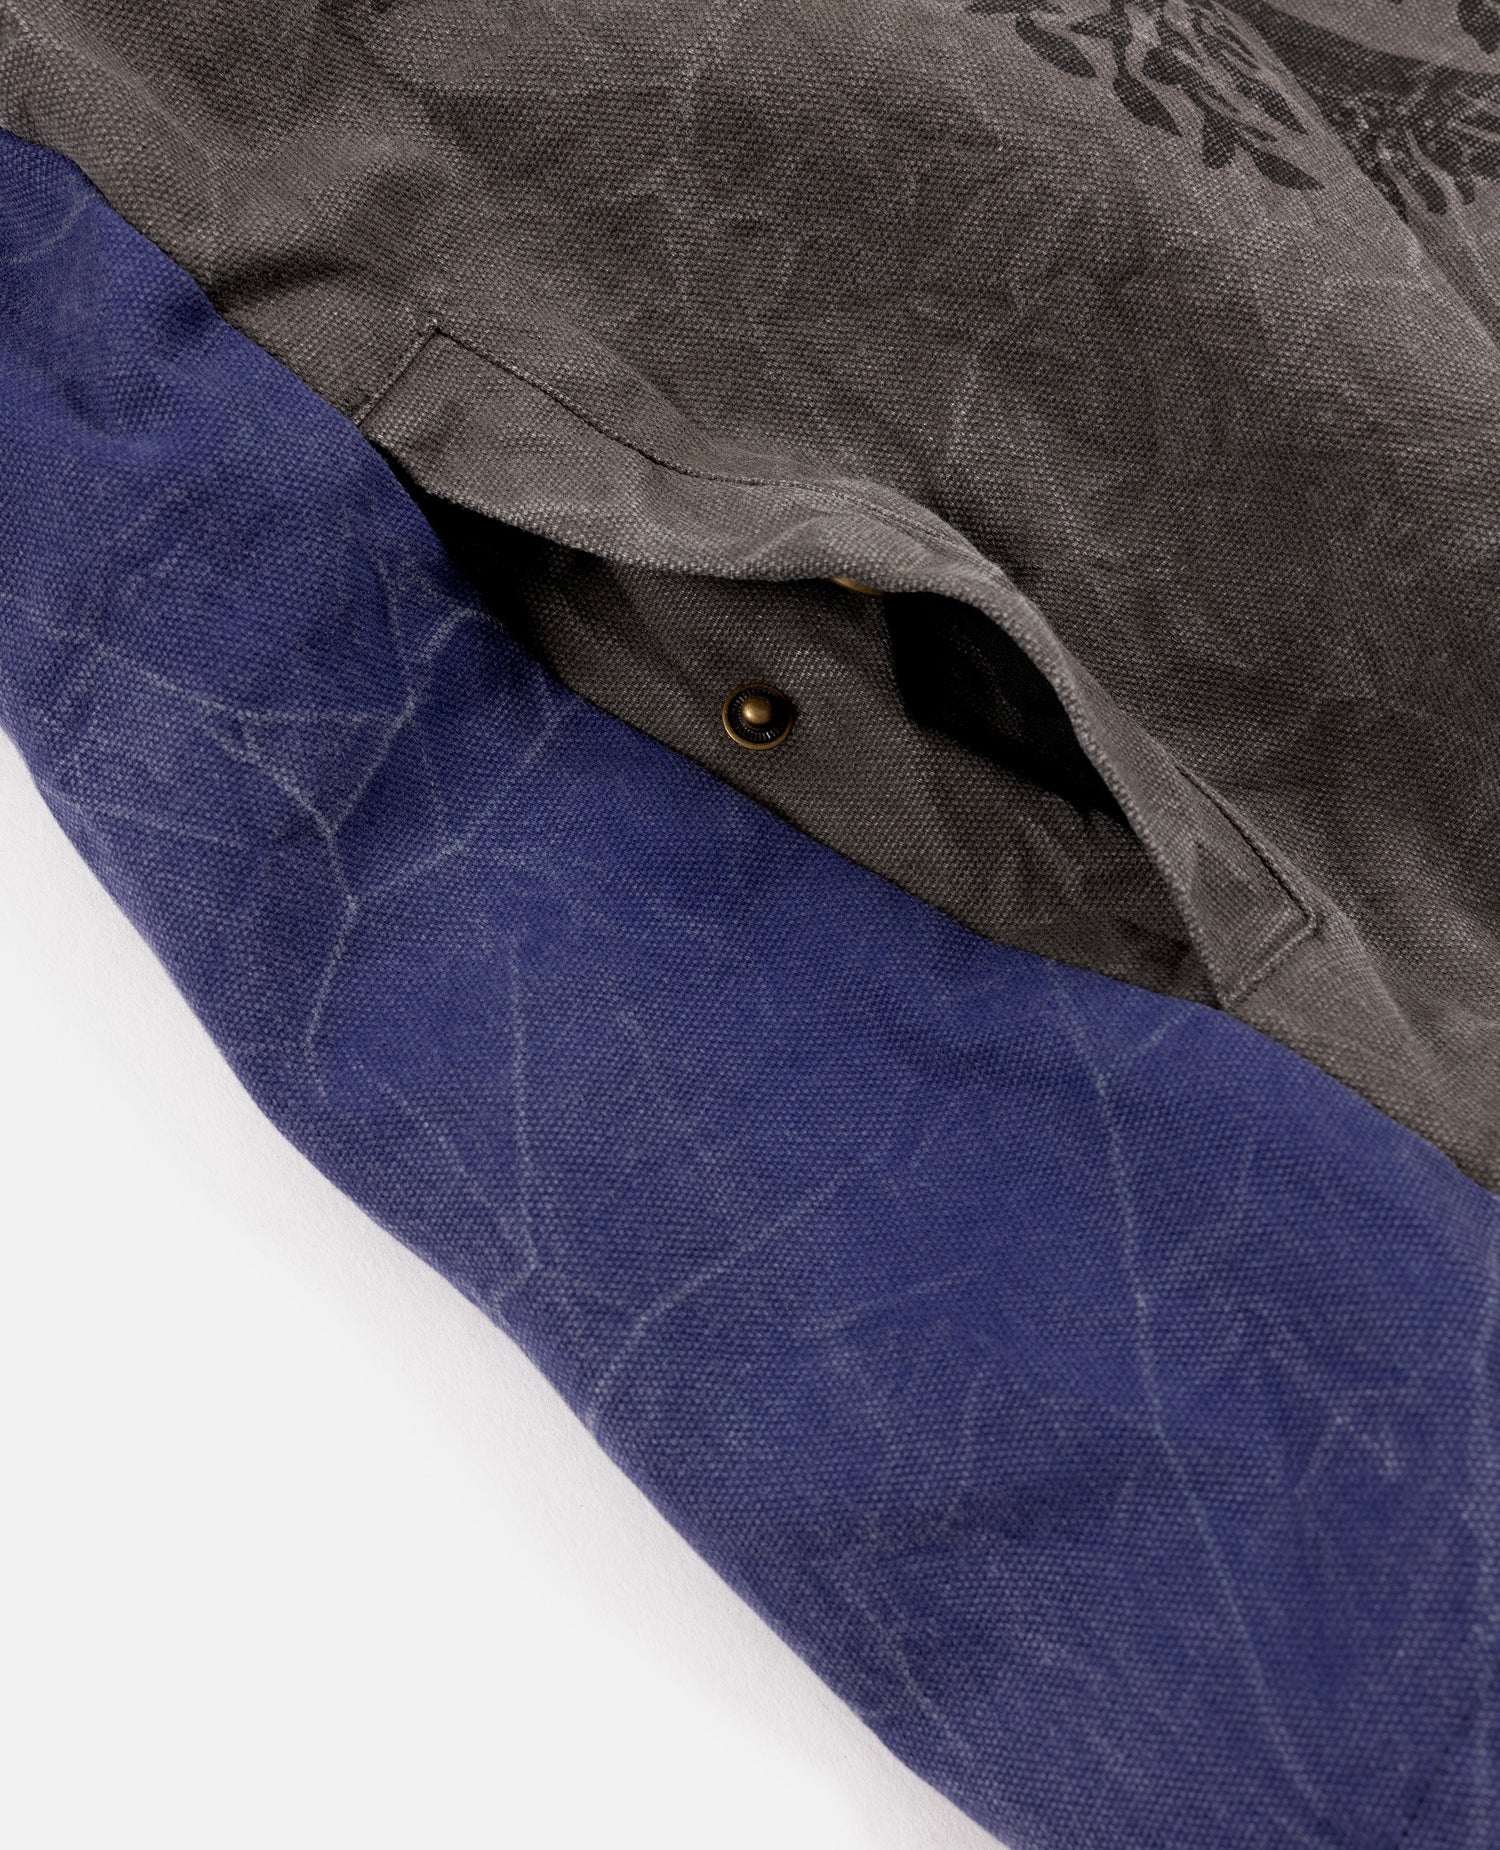 Patta Symbols Zip Hooded Jacket (Raven/Odyssey Gray)